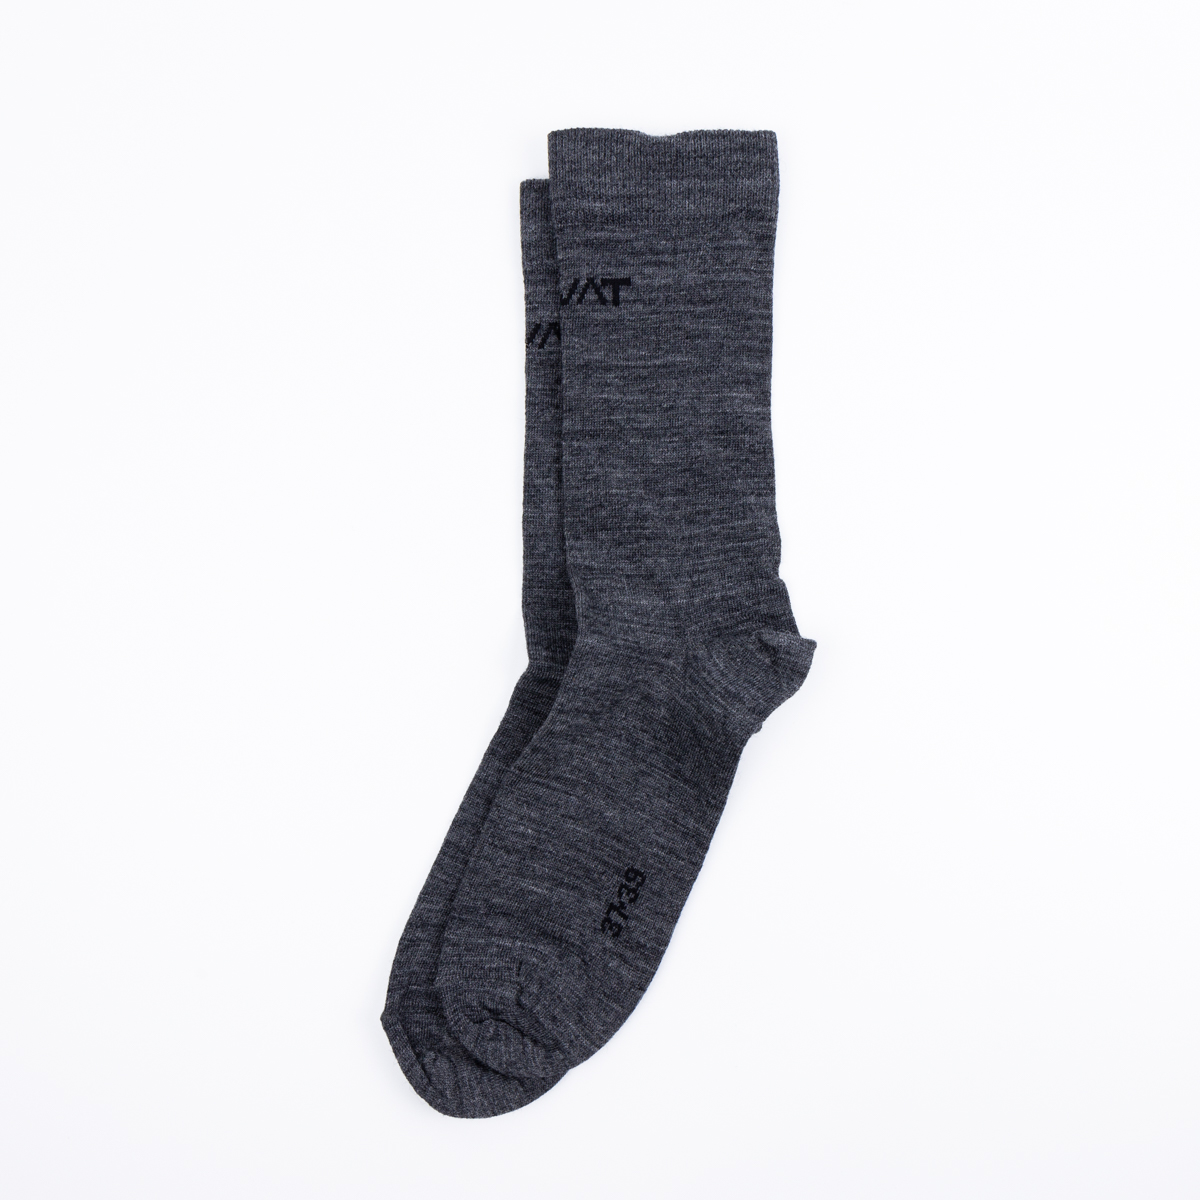 Fylsta Sock Dark greyproduktzoombild #1